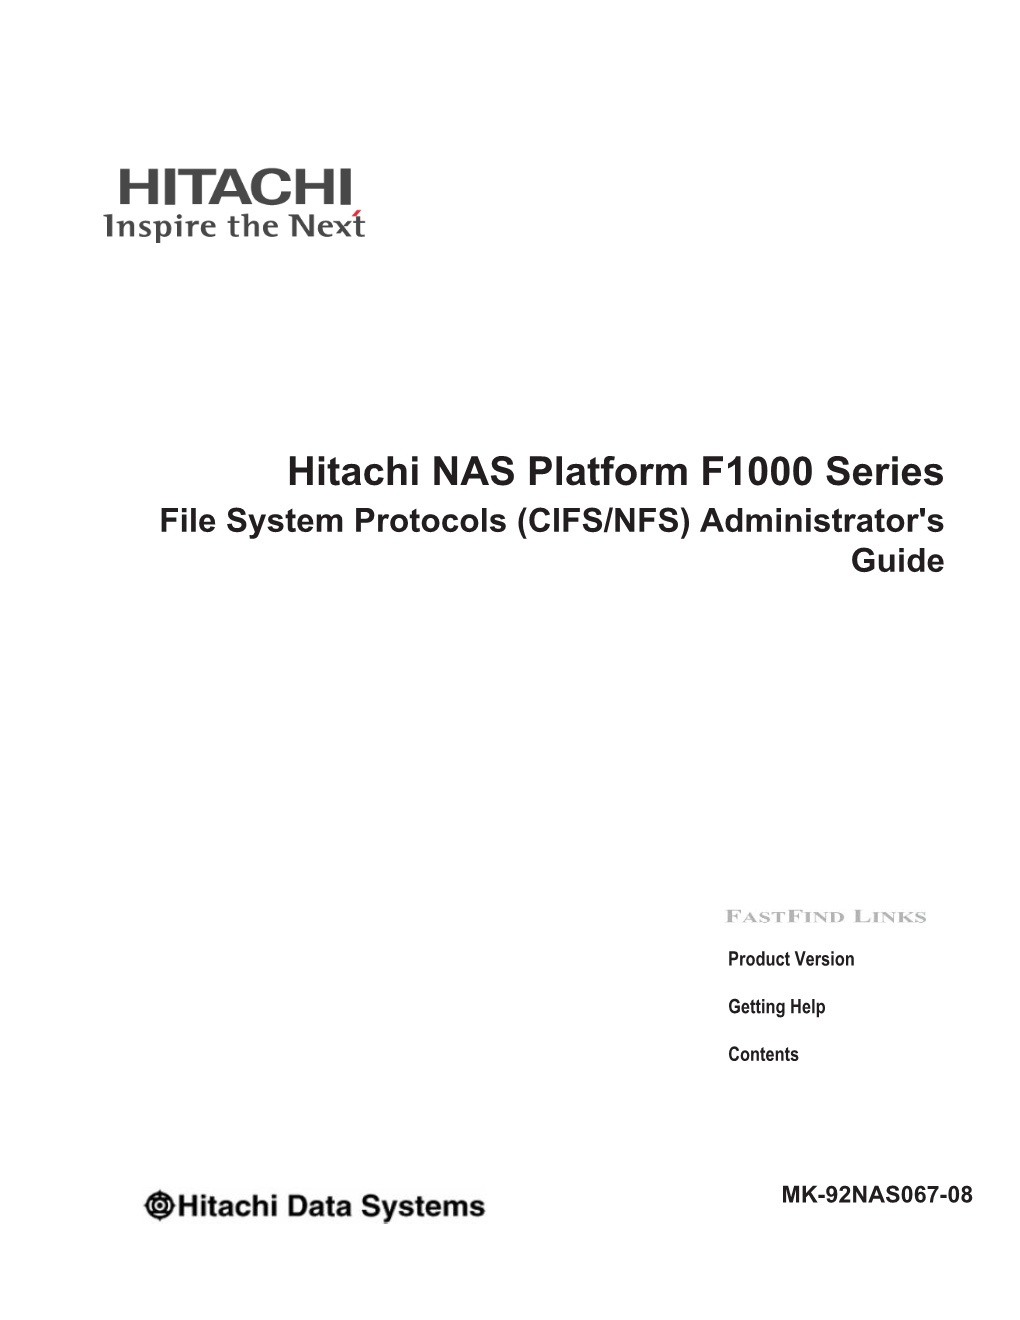 Hitachi NAS Platform F1000 Series File System Protocols (CIFS/NFS) Administrator's Guide